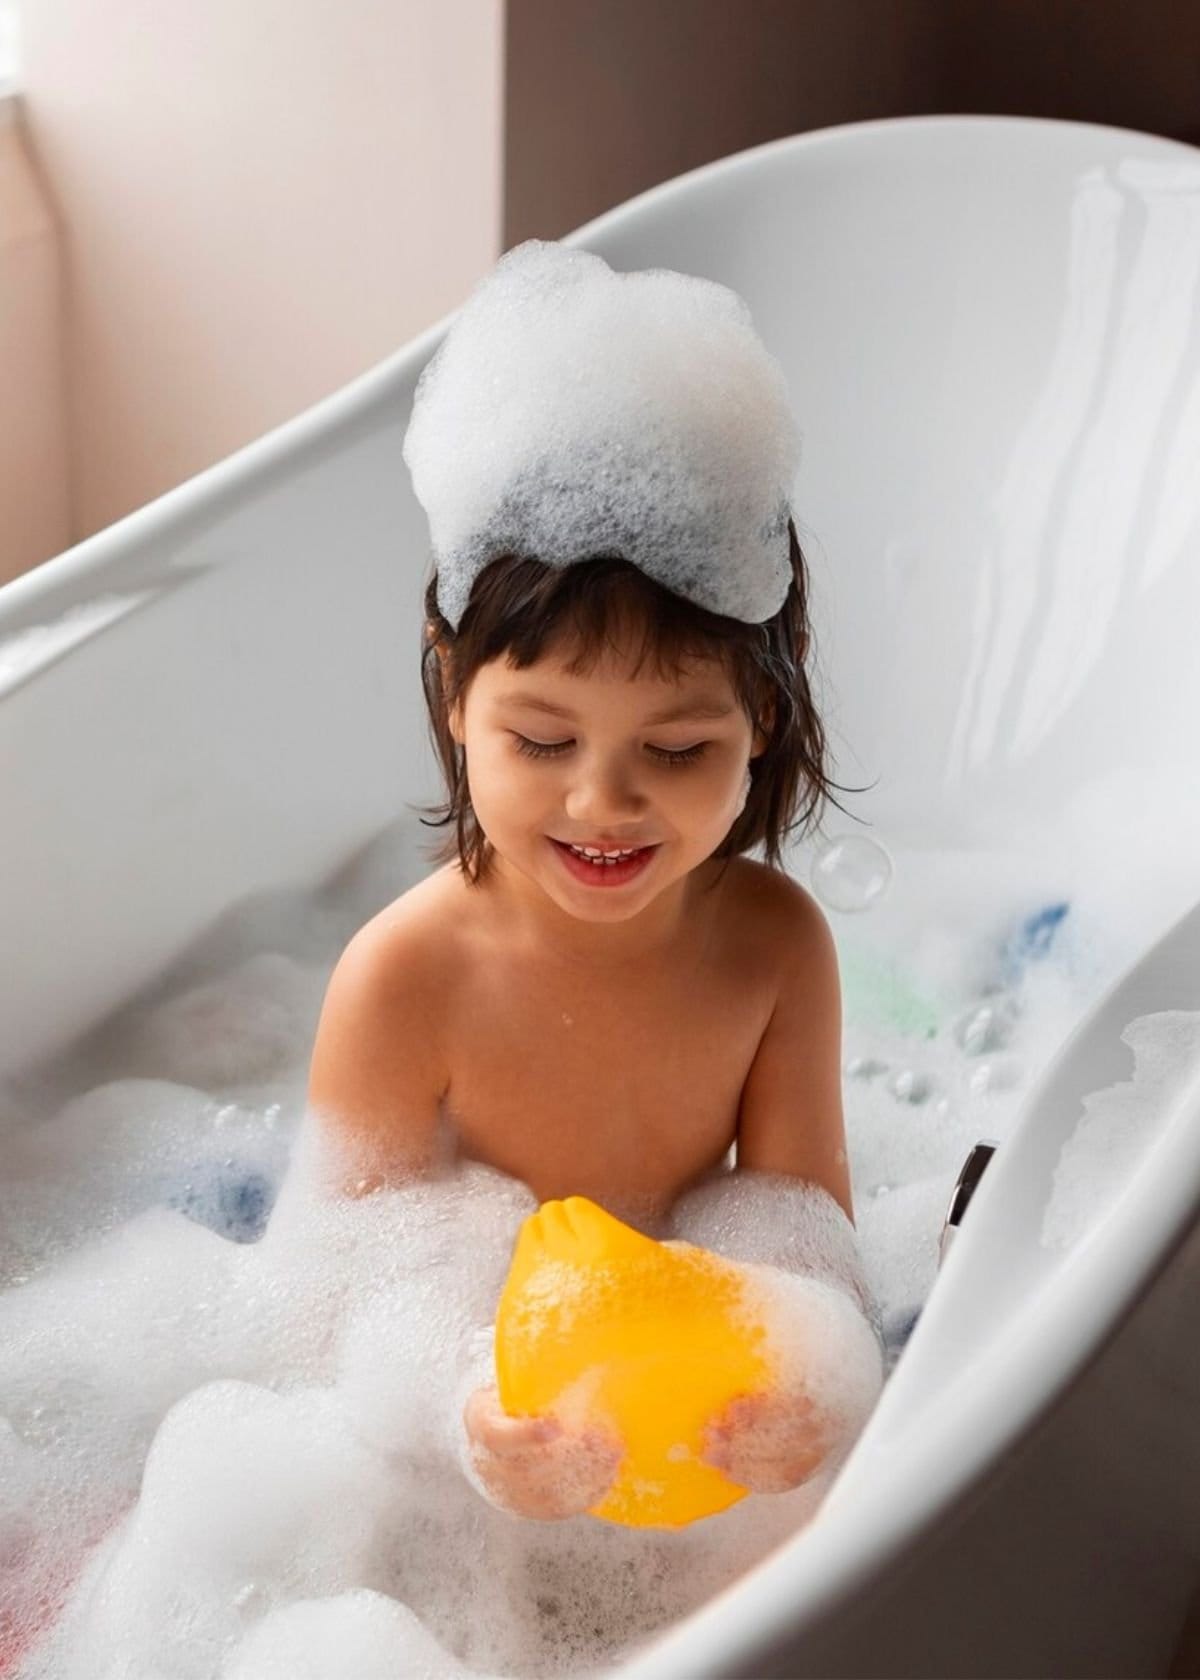 How Toxic Is Kids Shampoo? The Hidden Dangers of Kids Shampoo